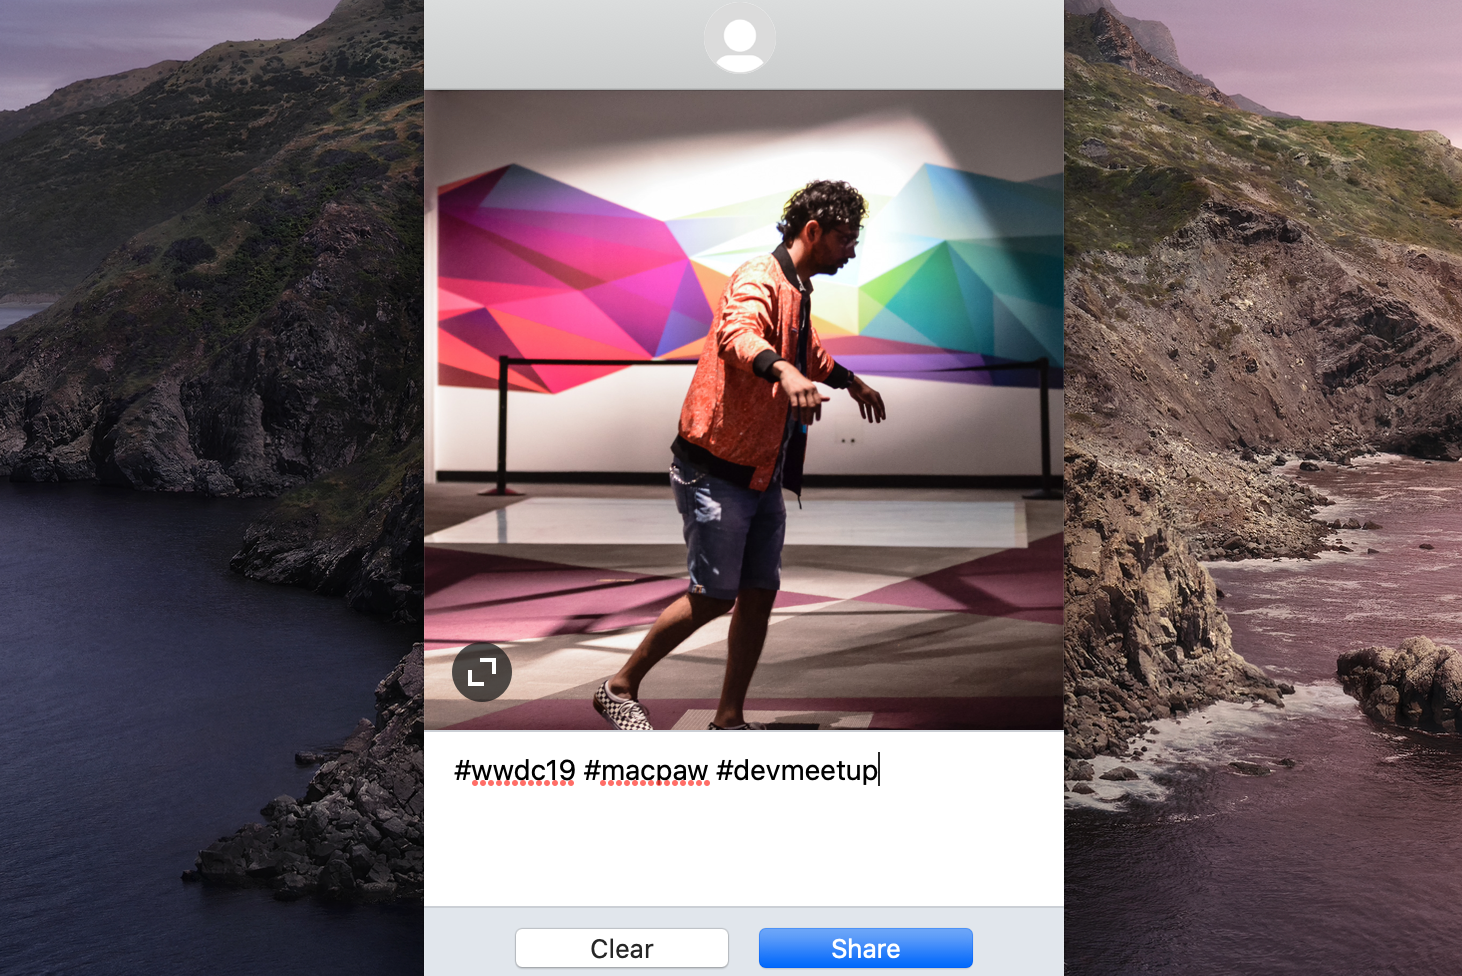 instagram app for macbook air